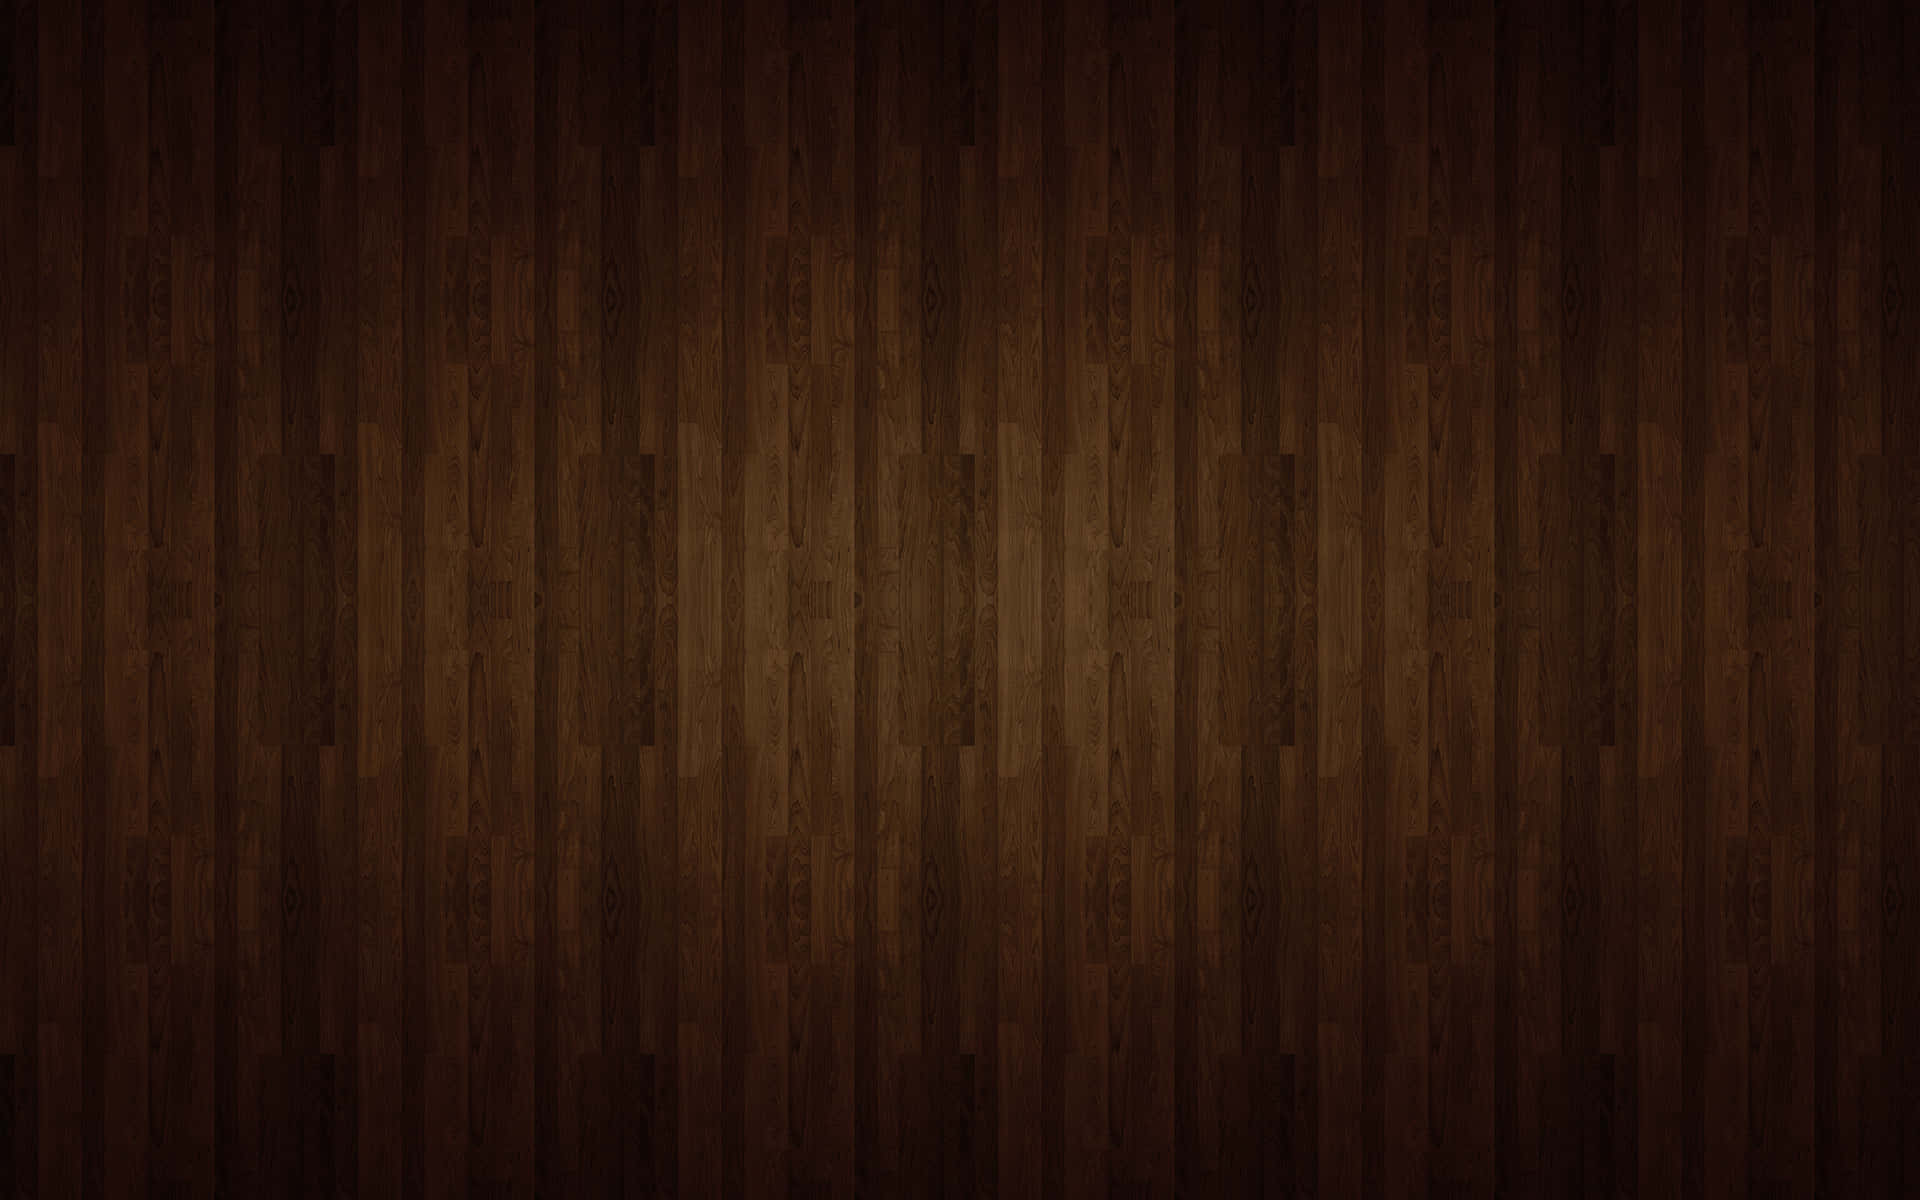 Amazon.com: Dimoon Wood Wallpaper Brown Dark Wood Contact Paper Brown Wood  Plank Wood Peel and Stick Wallpaper Removable Rustic Wood Grain Self  Adhesive Vintage Distressed Texture Desk Vinyl Roll17.7 x78.7'' : Health